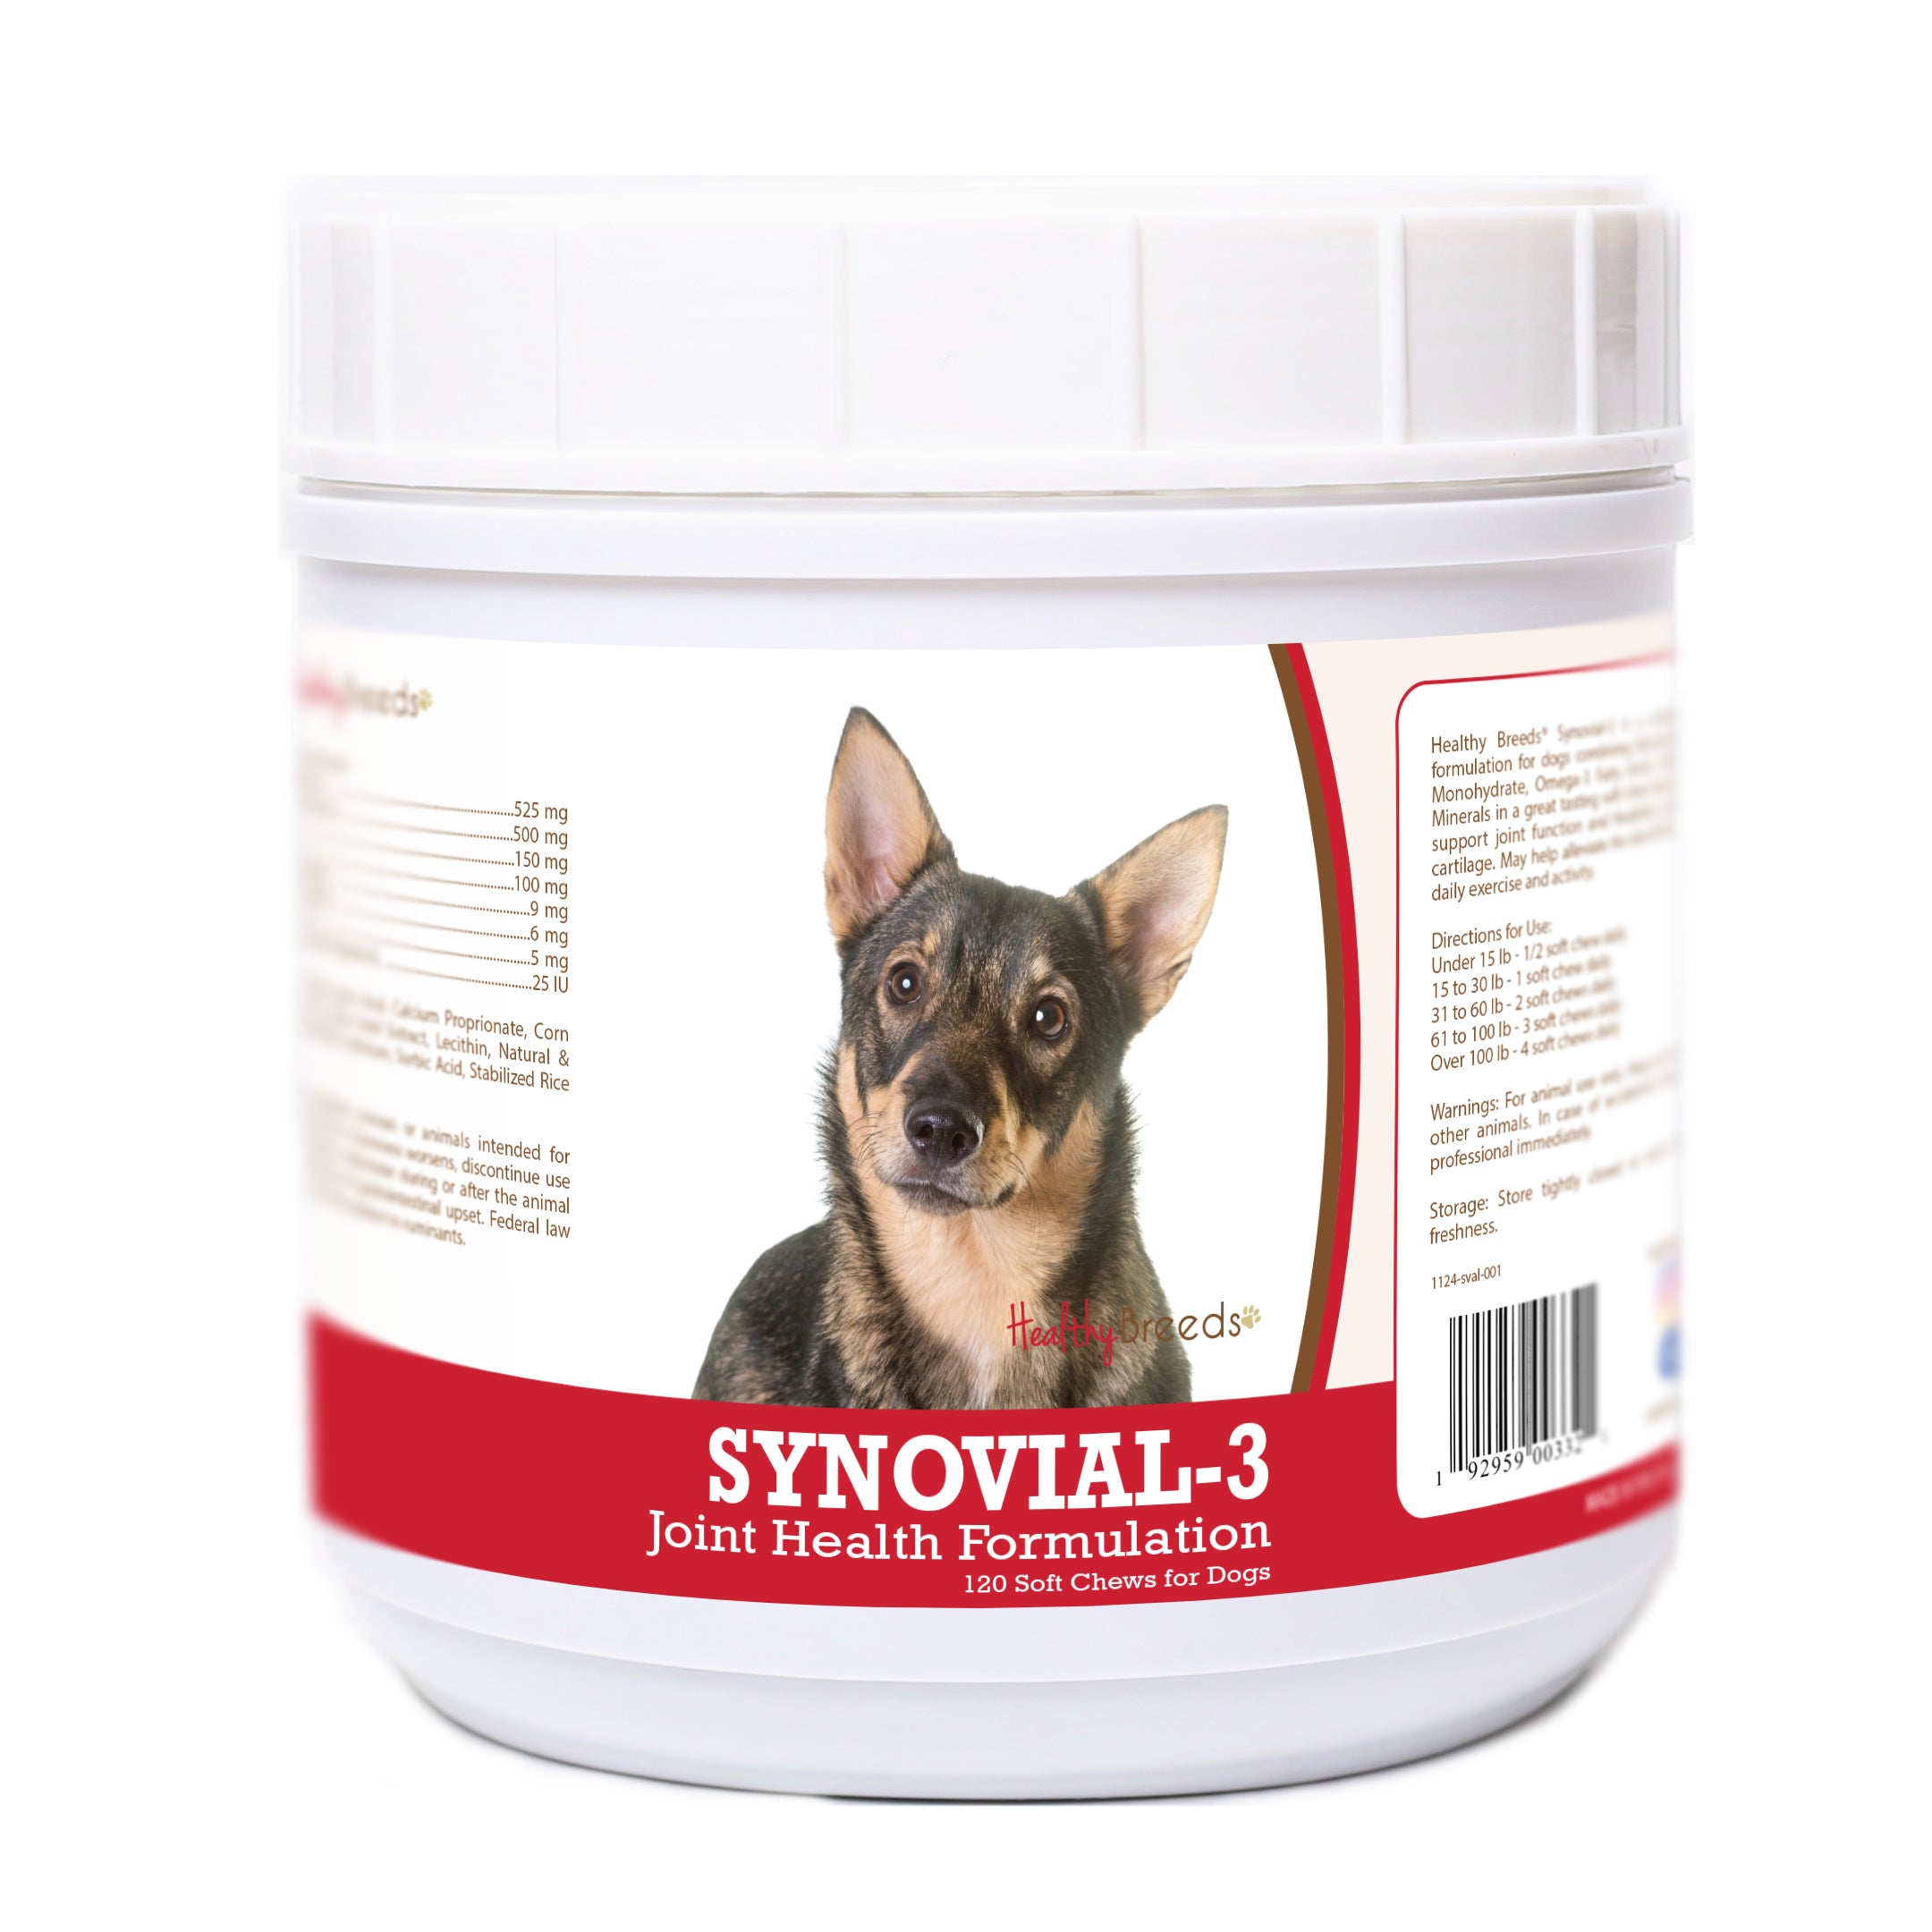 Swedish Vallhund Synovial-3 Joint Health Formulation Soft Chews 120 Count